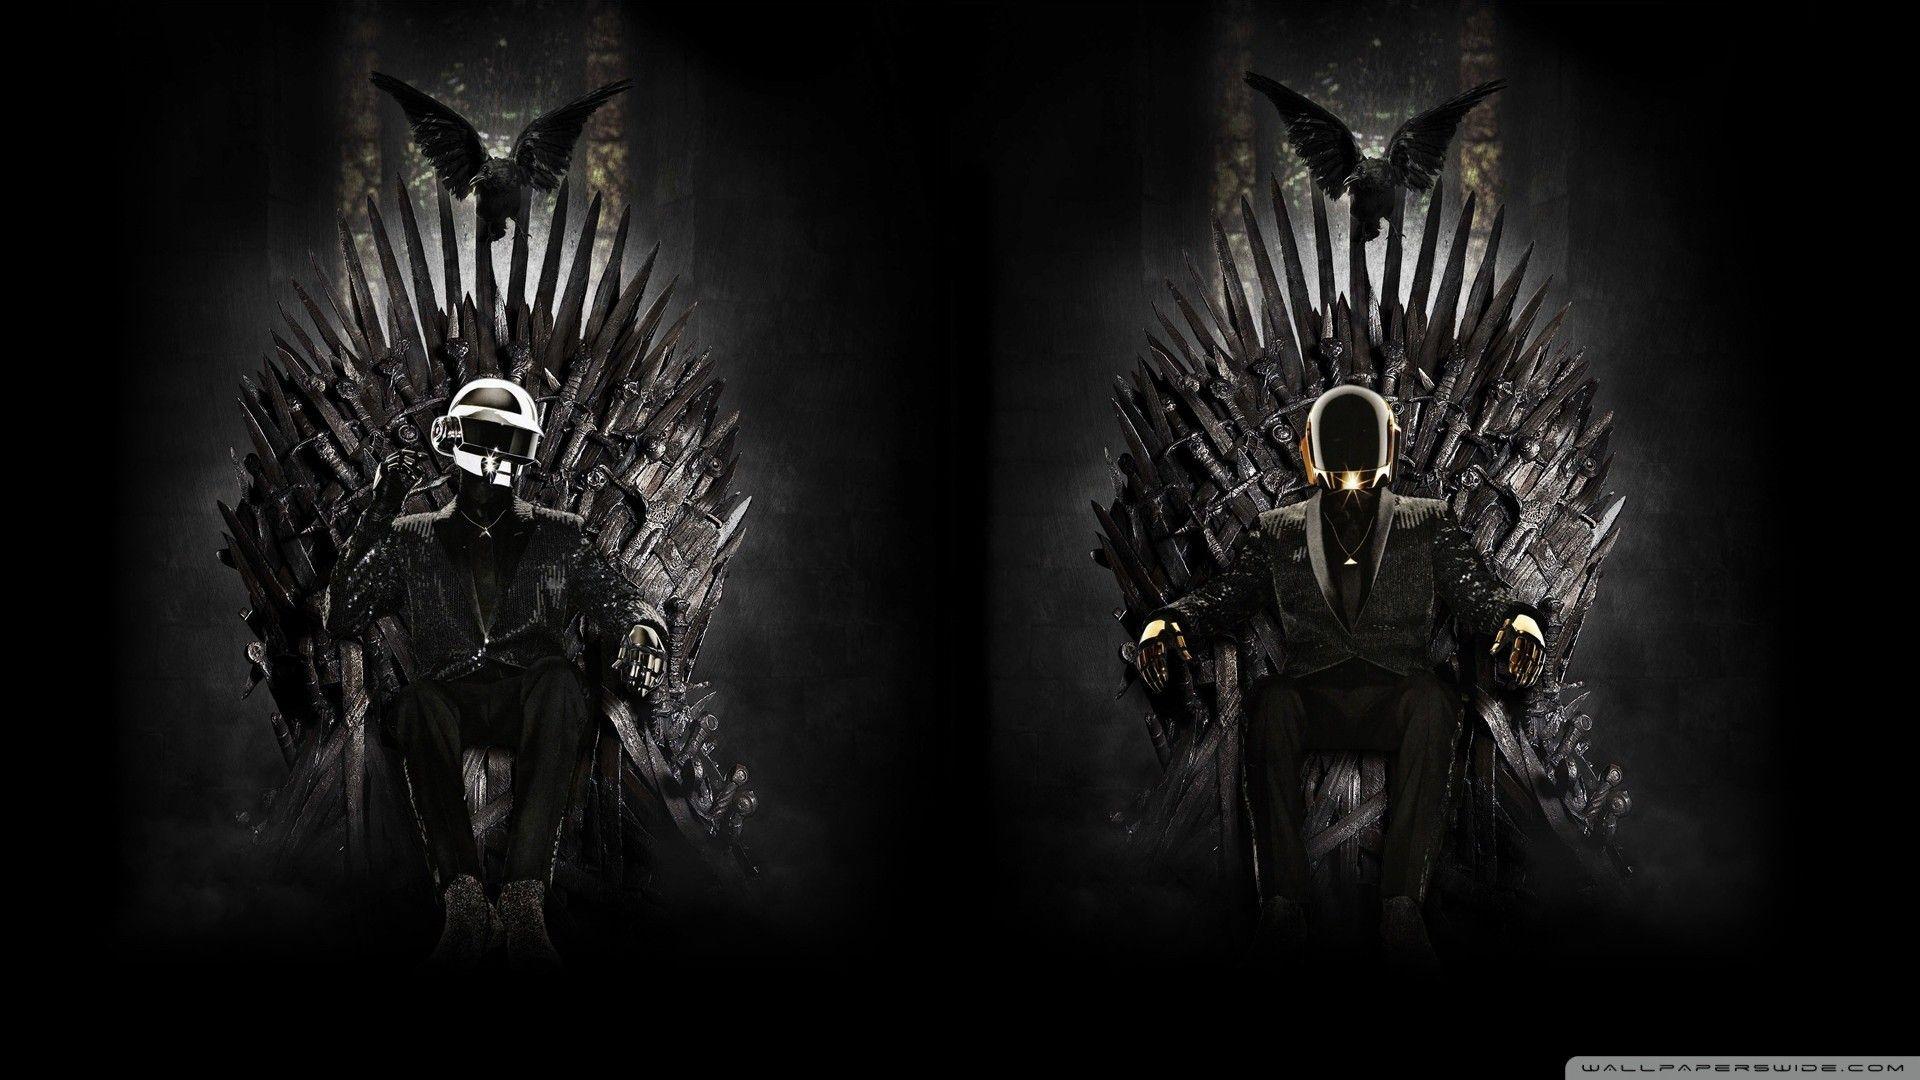 Wallpaper, 1920x1080 px, Daft Punk, Game of Thrones, Iron Throne